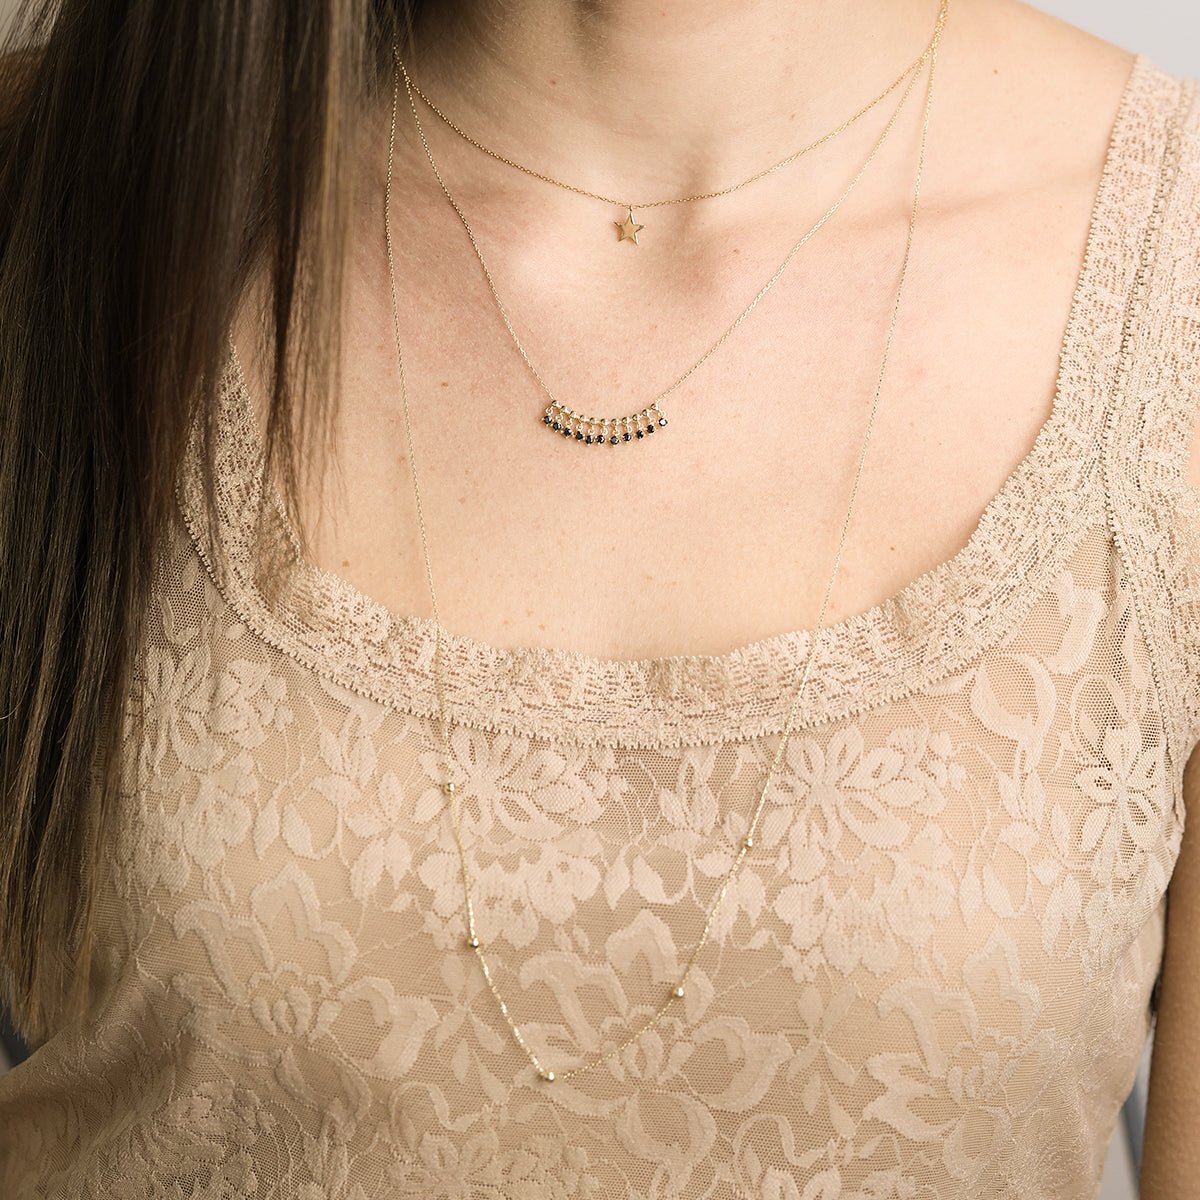 Black Onyx Fringe Necklace Necklaces Estella Collection #product_description# 17745 14k Birthstone Black #tag4# #tag5# #tag6# #tag7# #tag8# #tag9# #tag10#